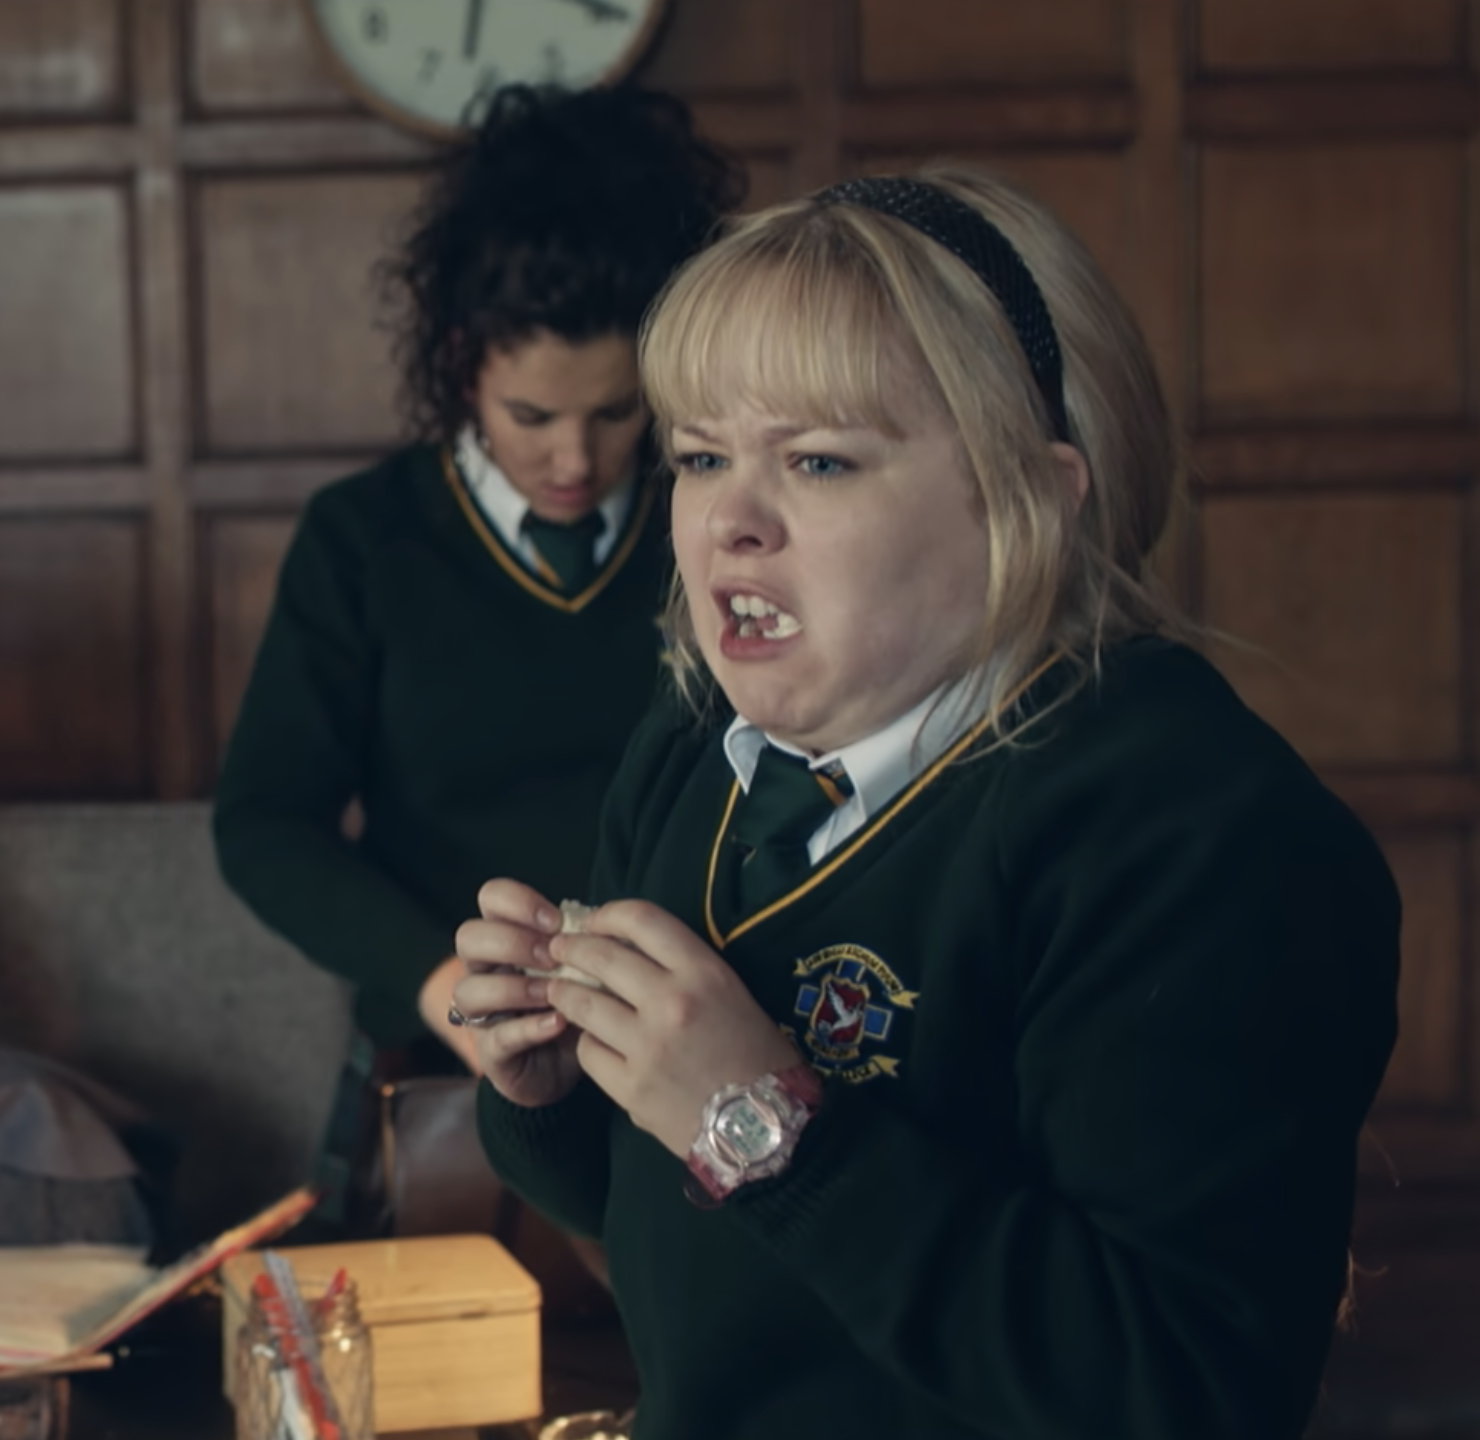 Clare in her school uniform eating a sandwich